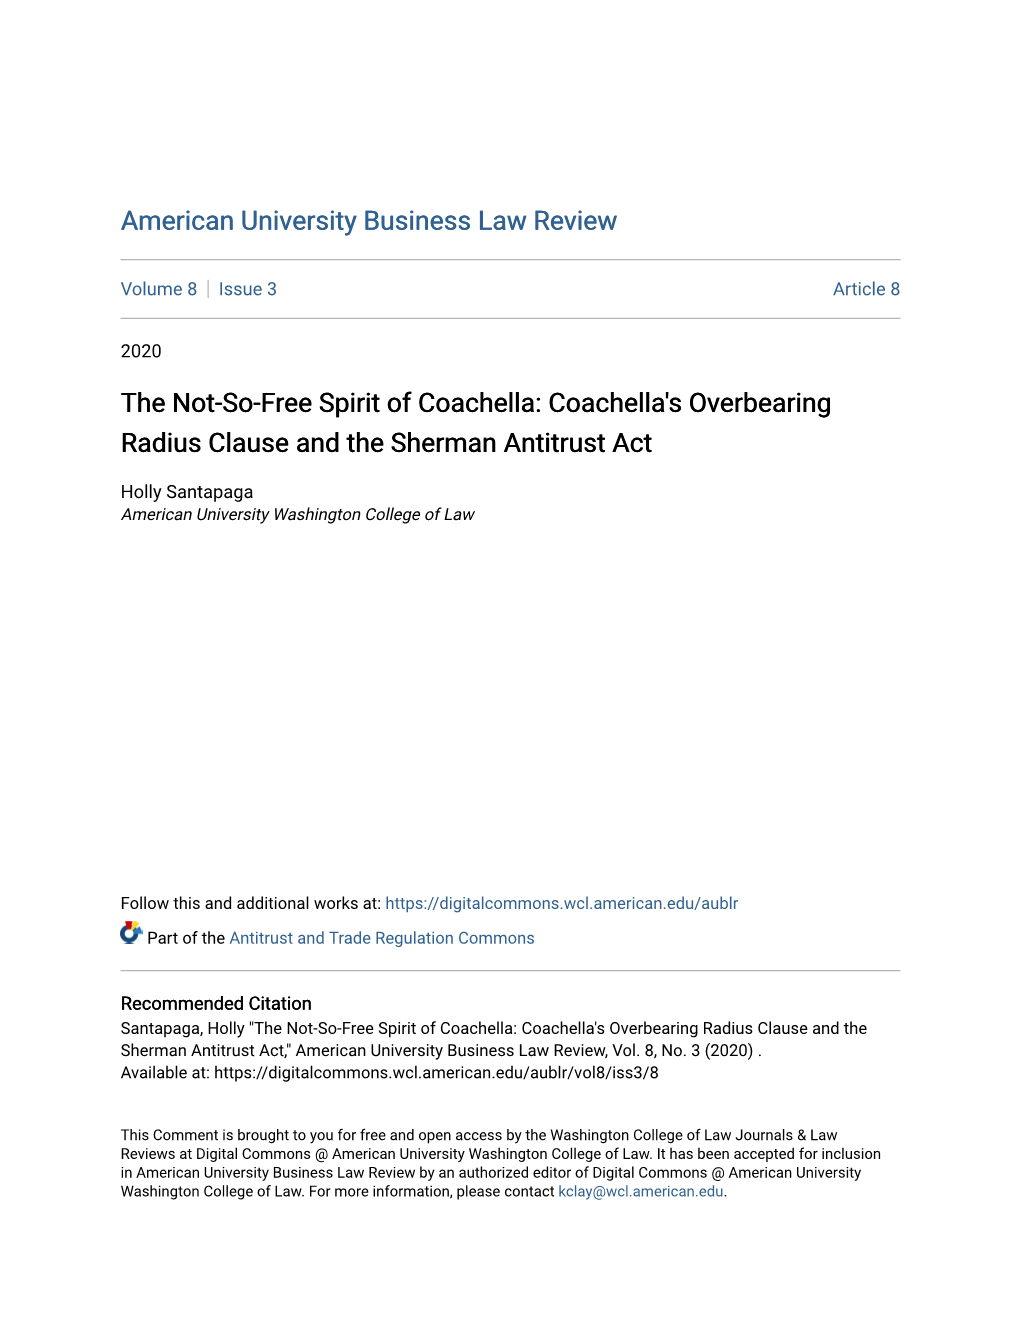 Coachella's Overbearing Radius Clause and the Sherman Antitrust Act